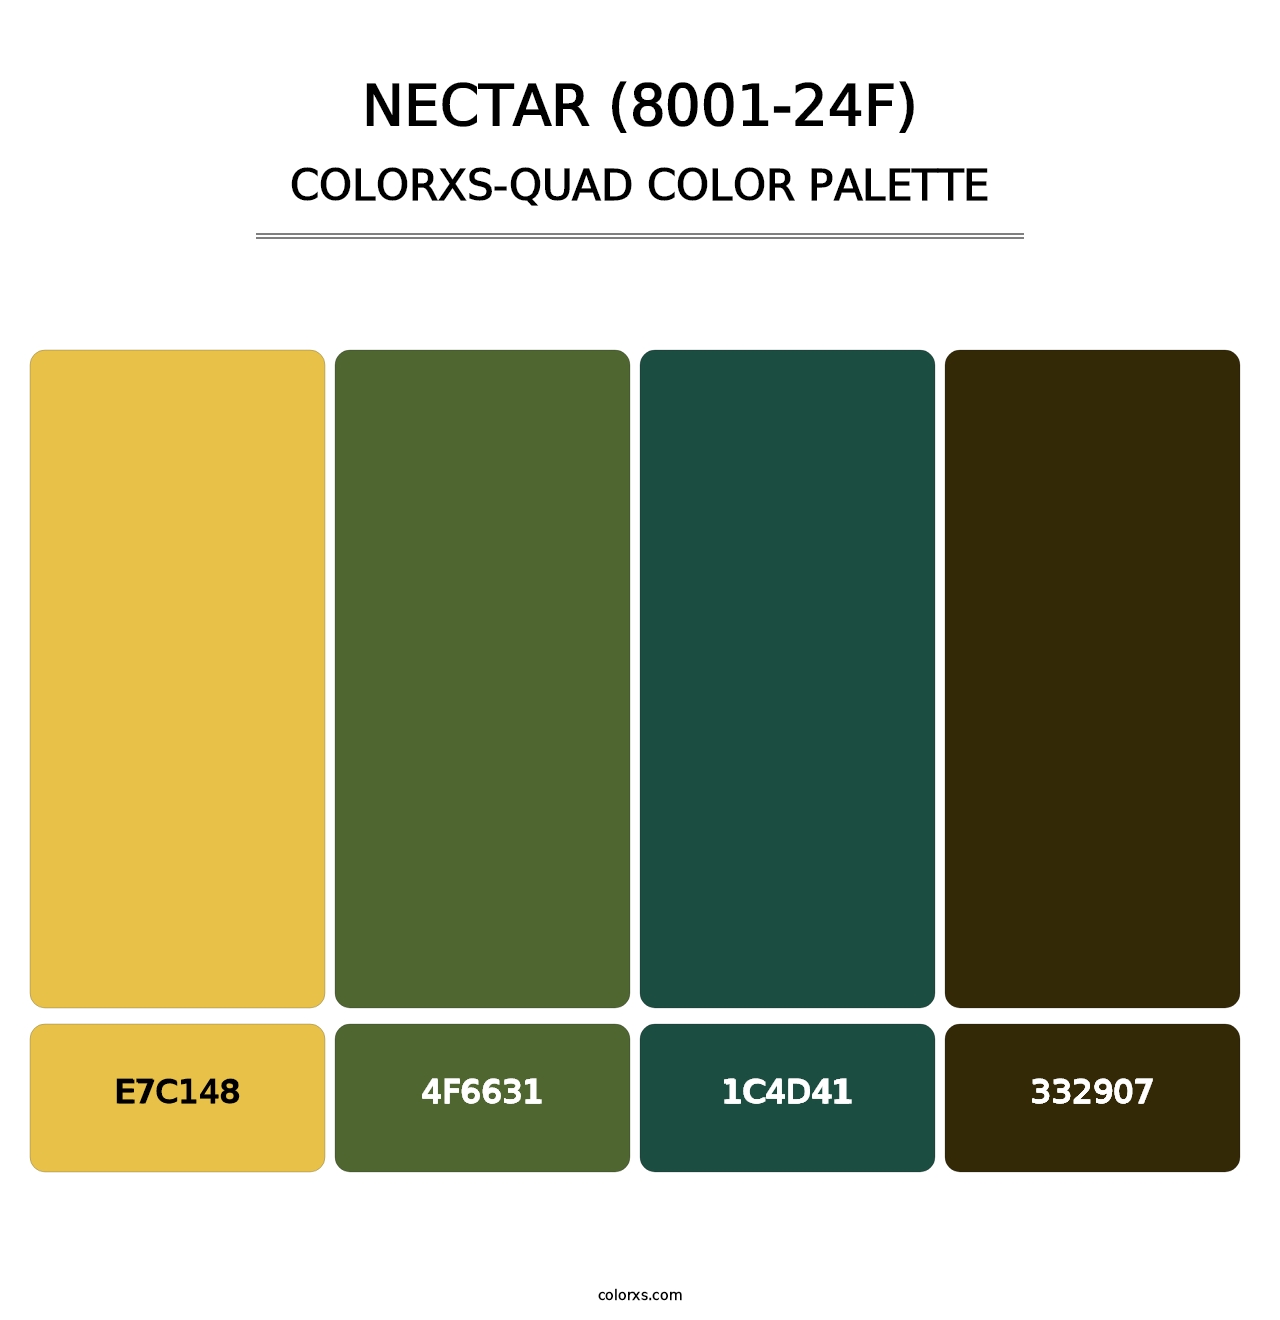 Nectar (8001-24F) - Colorxs Quad Palette